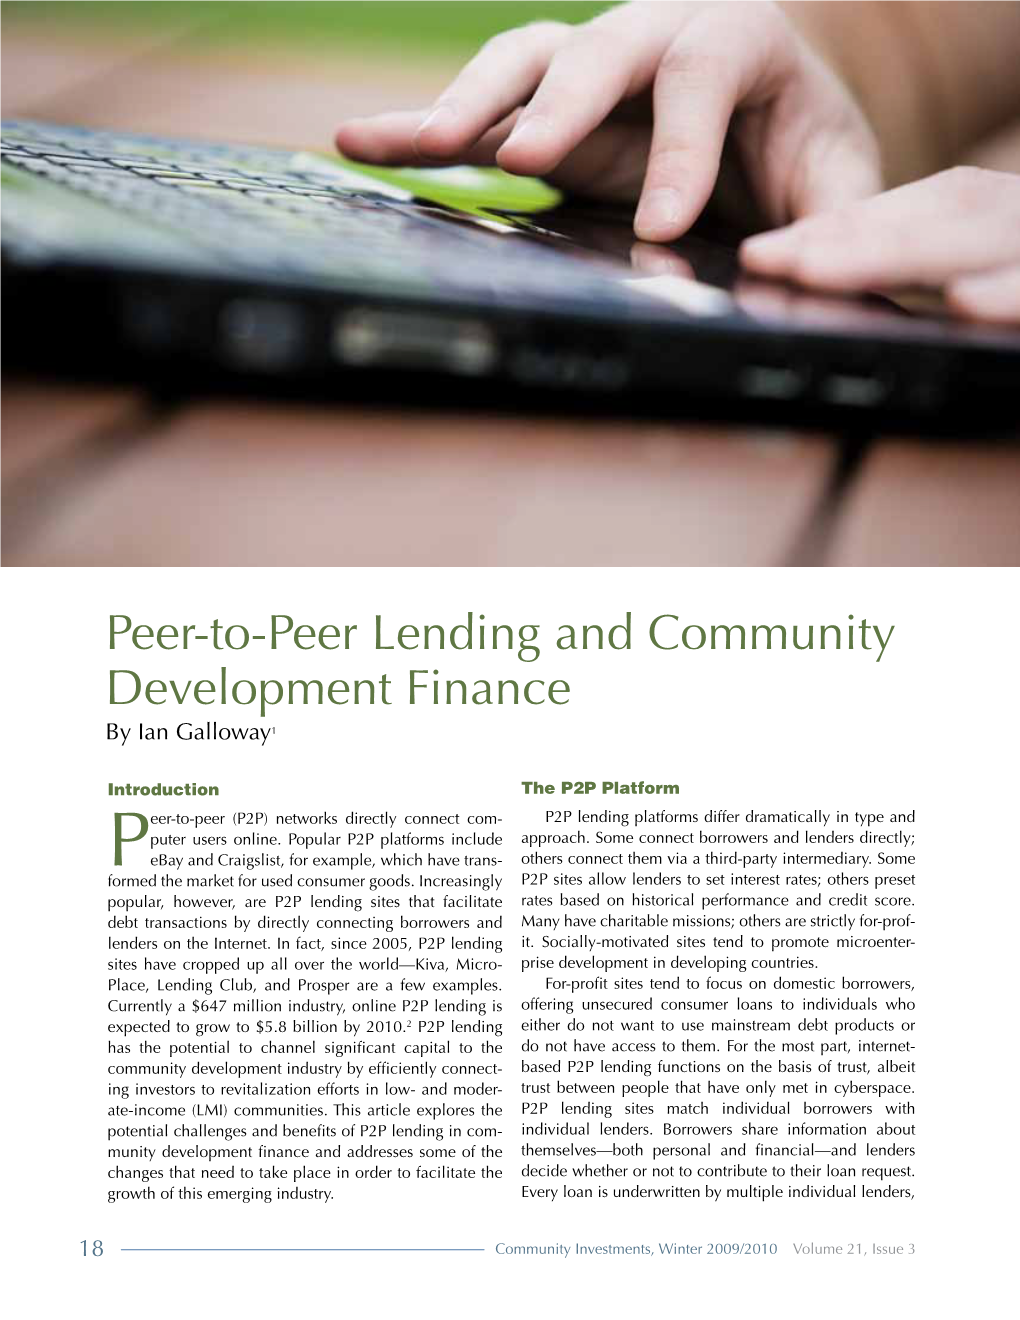 Peer-To-Peer Lending and Community Development Finance by Ian Galloway1